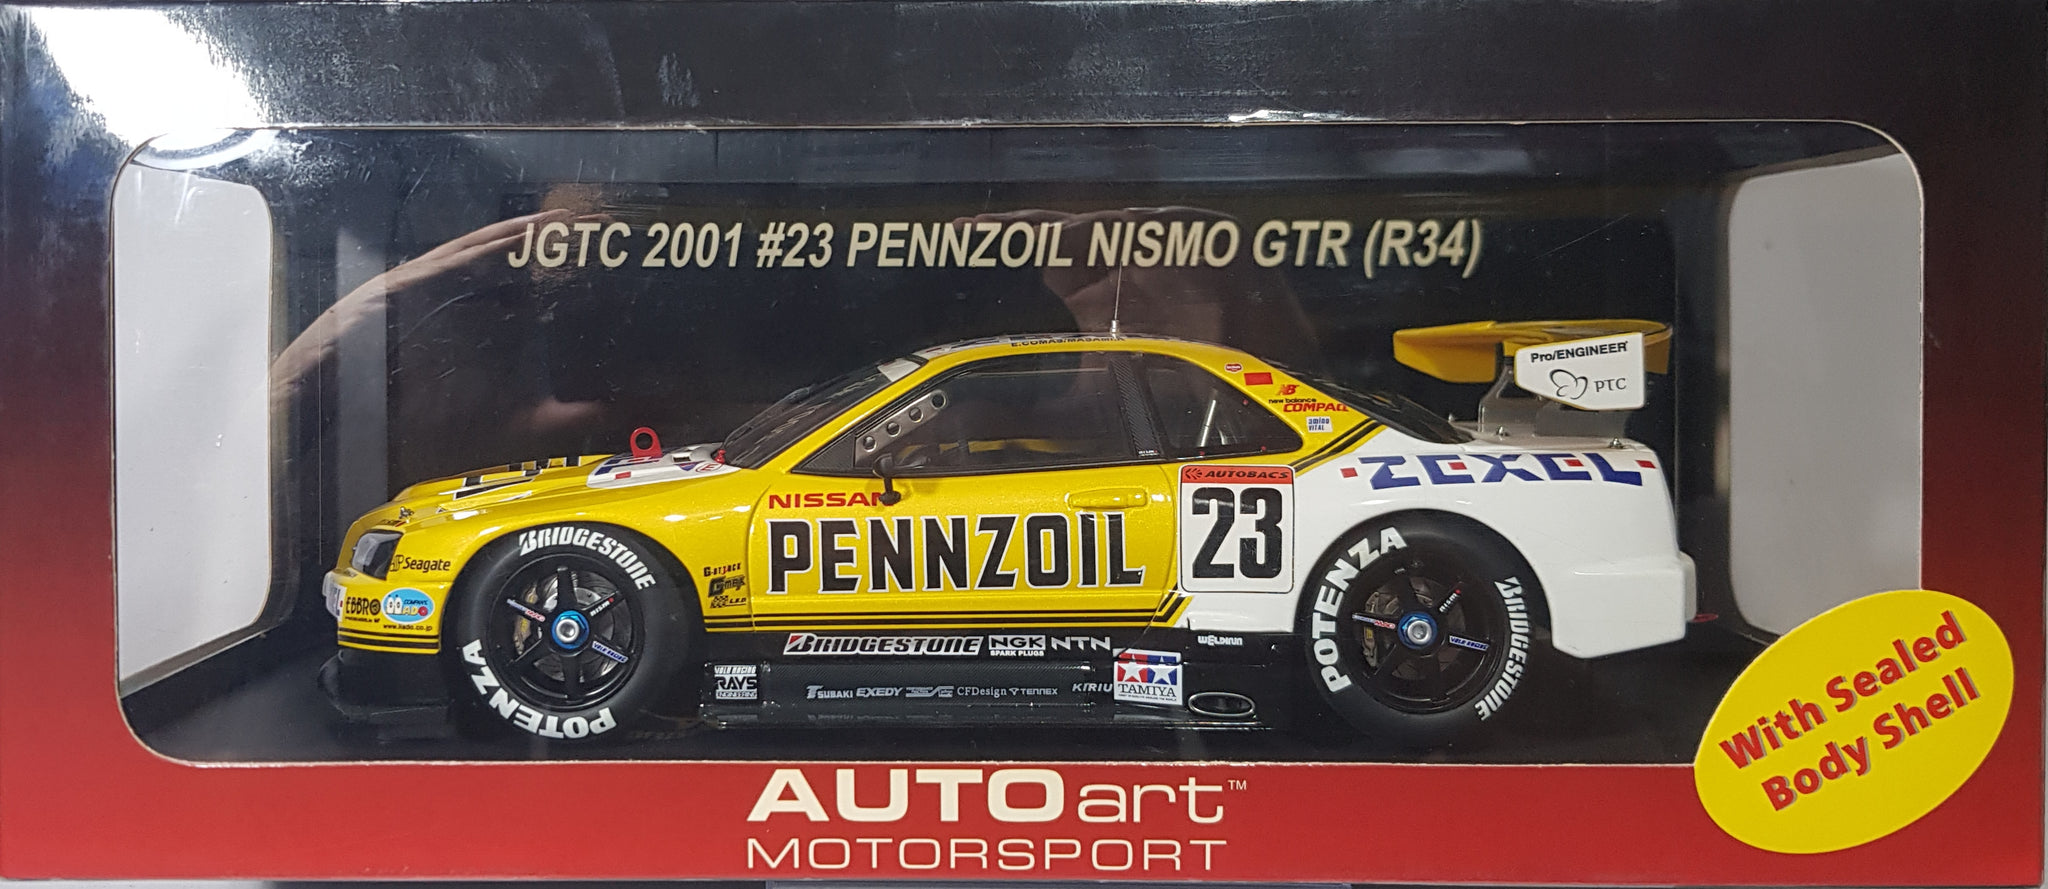 1:18 Autoart Nissan Skyline Nismo GTR R34 JGTC 2001 #23 Penzoil